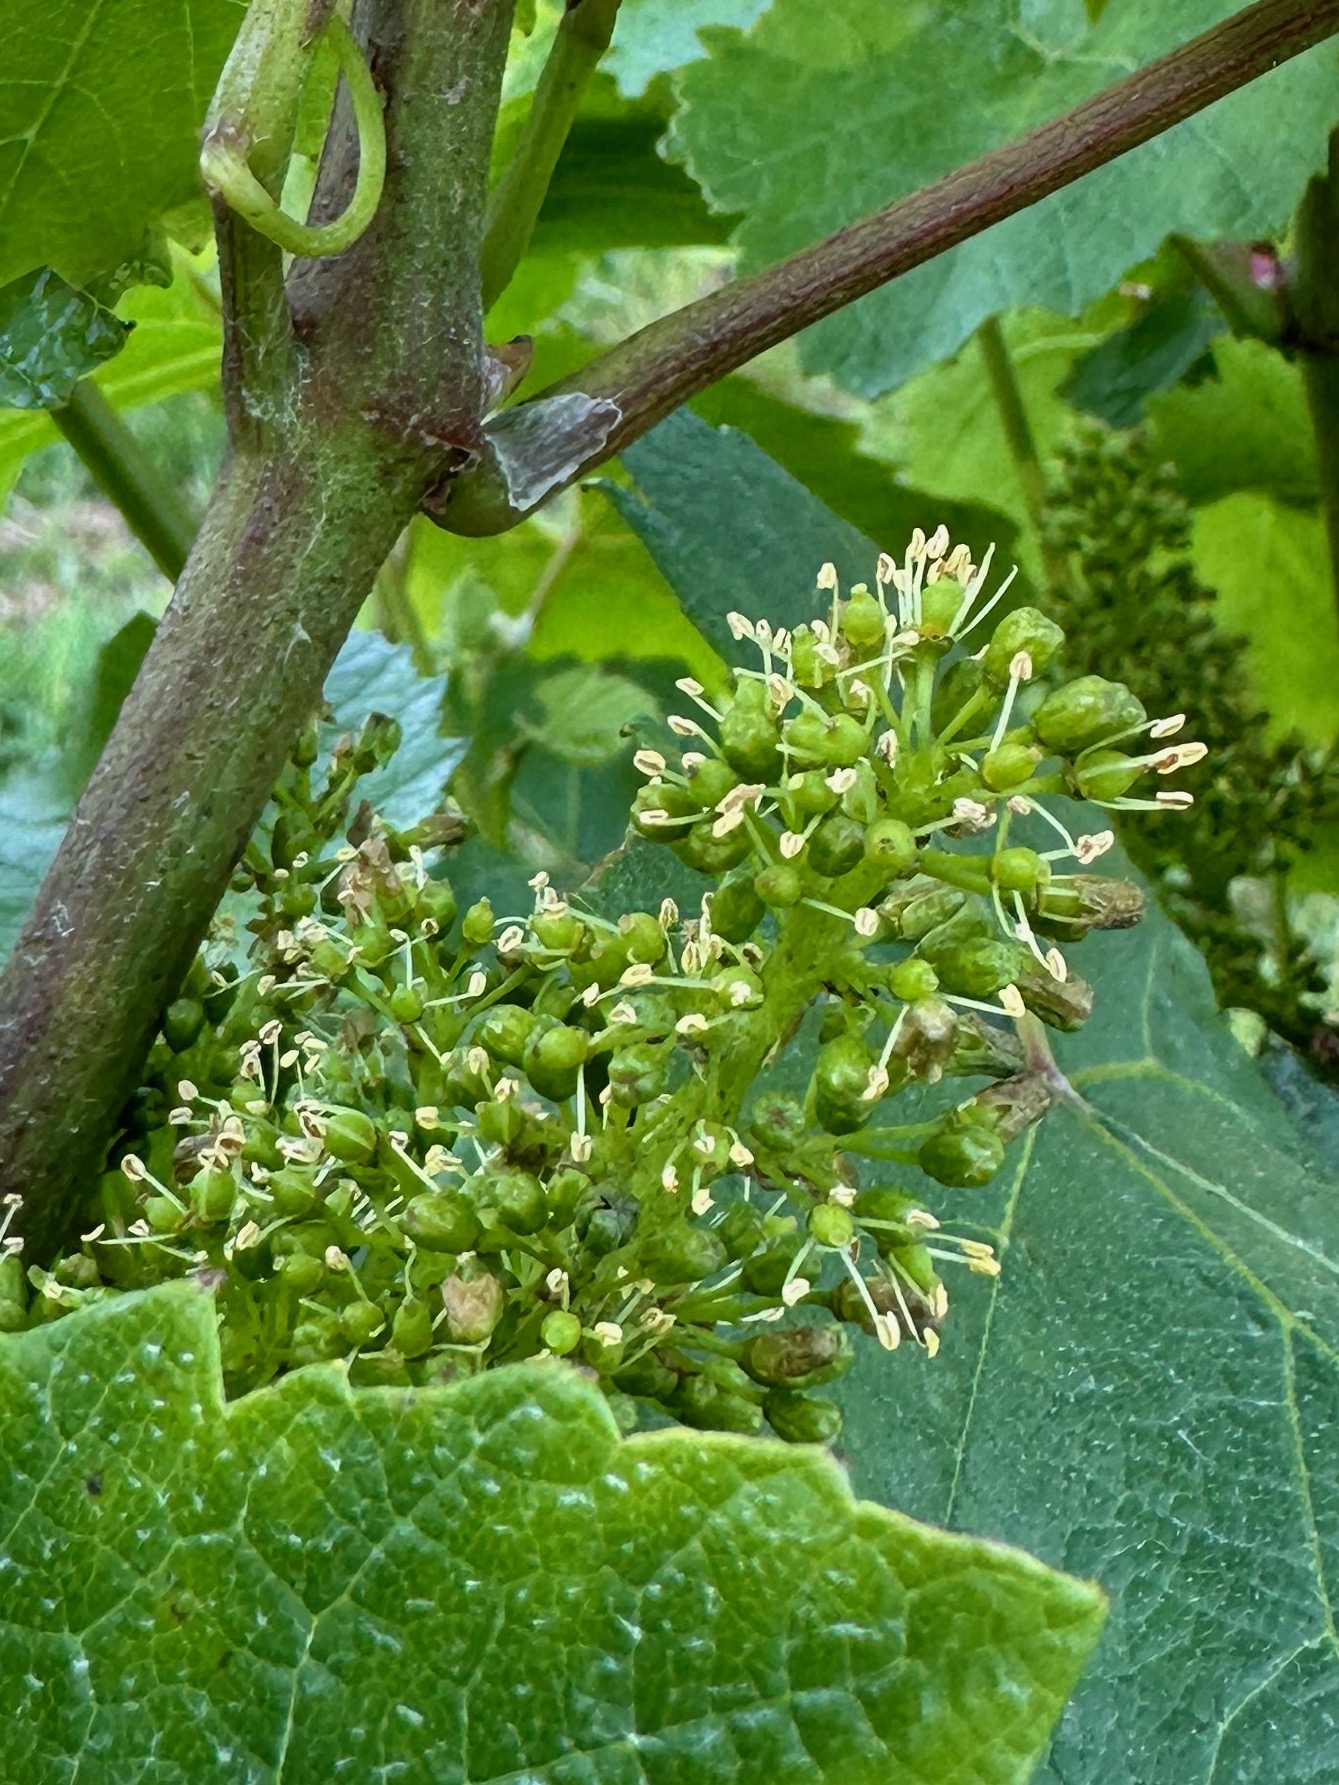 Oxney Vineyard in Flower